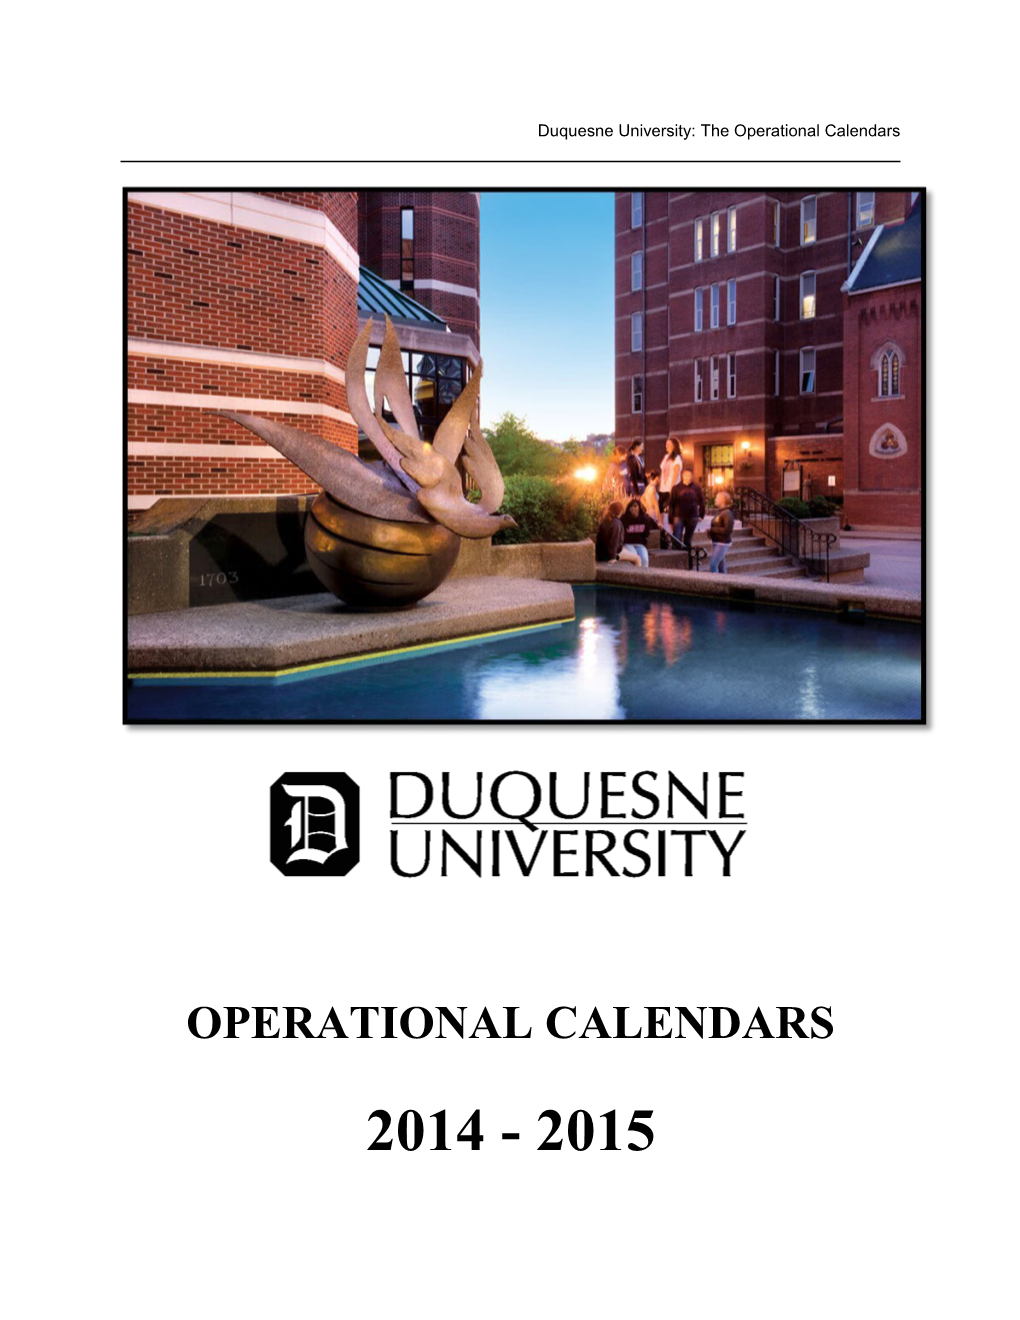 Duquesne University: the Operational Calendars